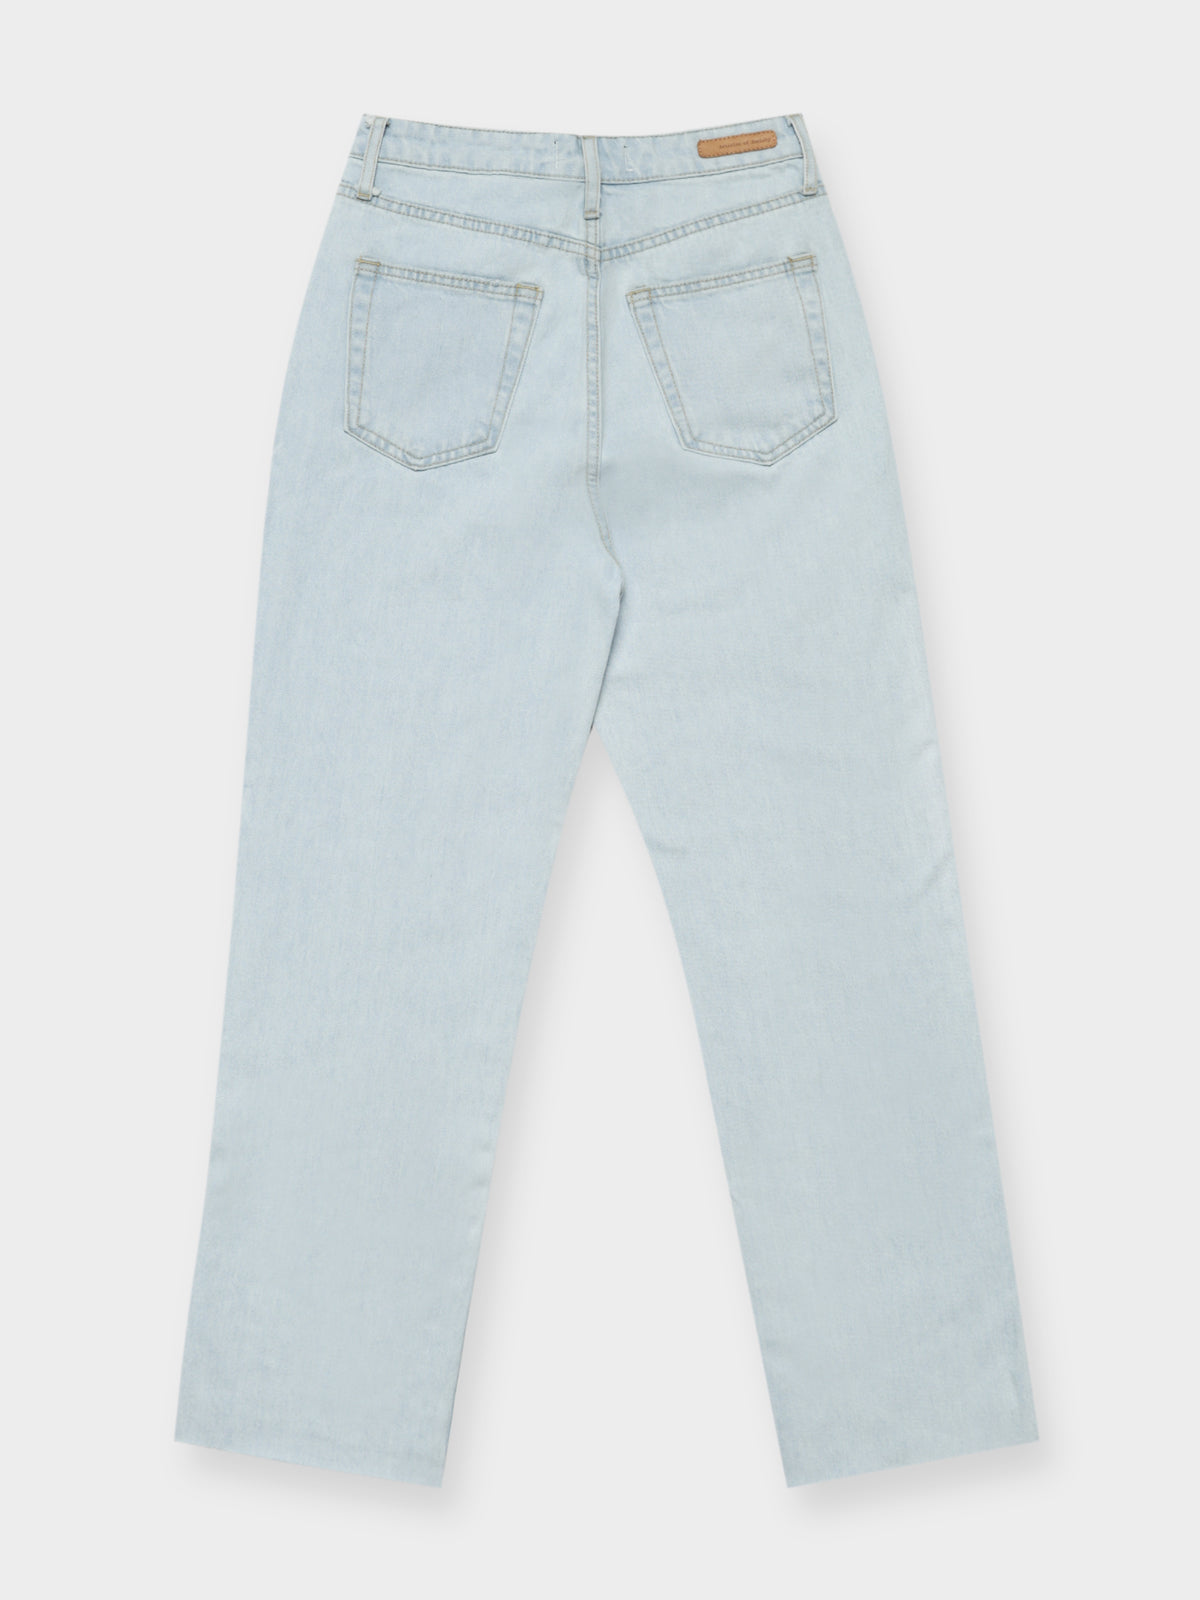 High Nina Crop Jeans in Vintage Blue